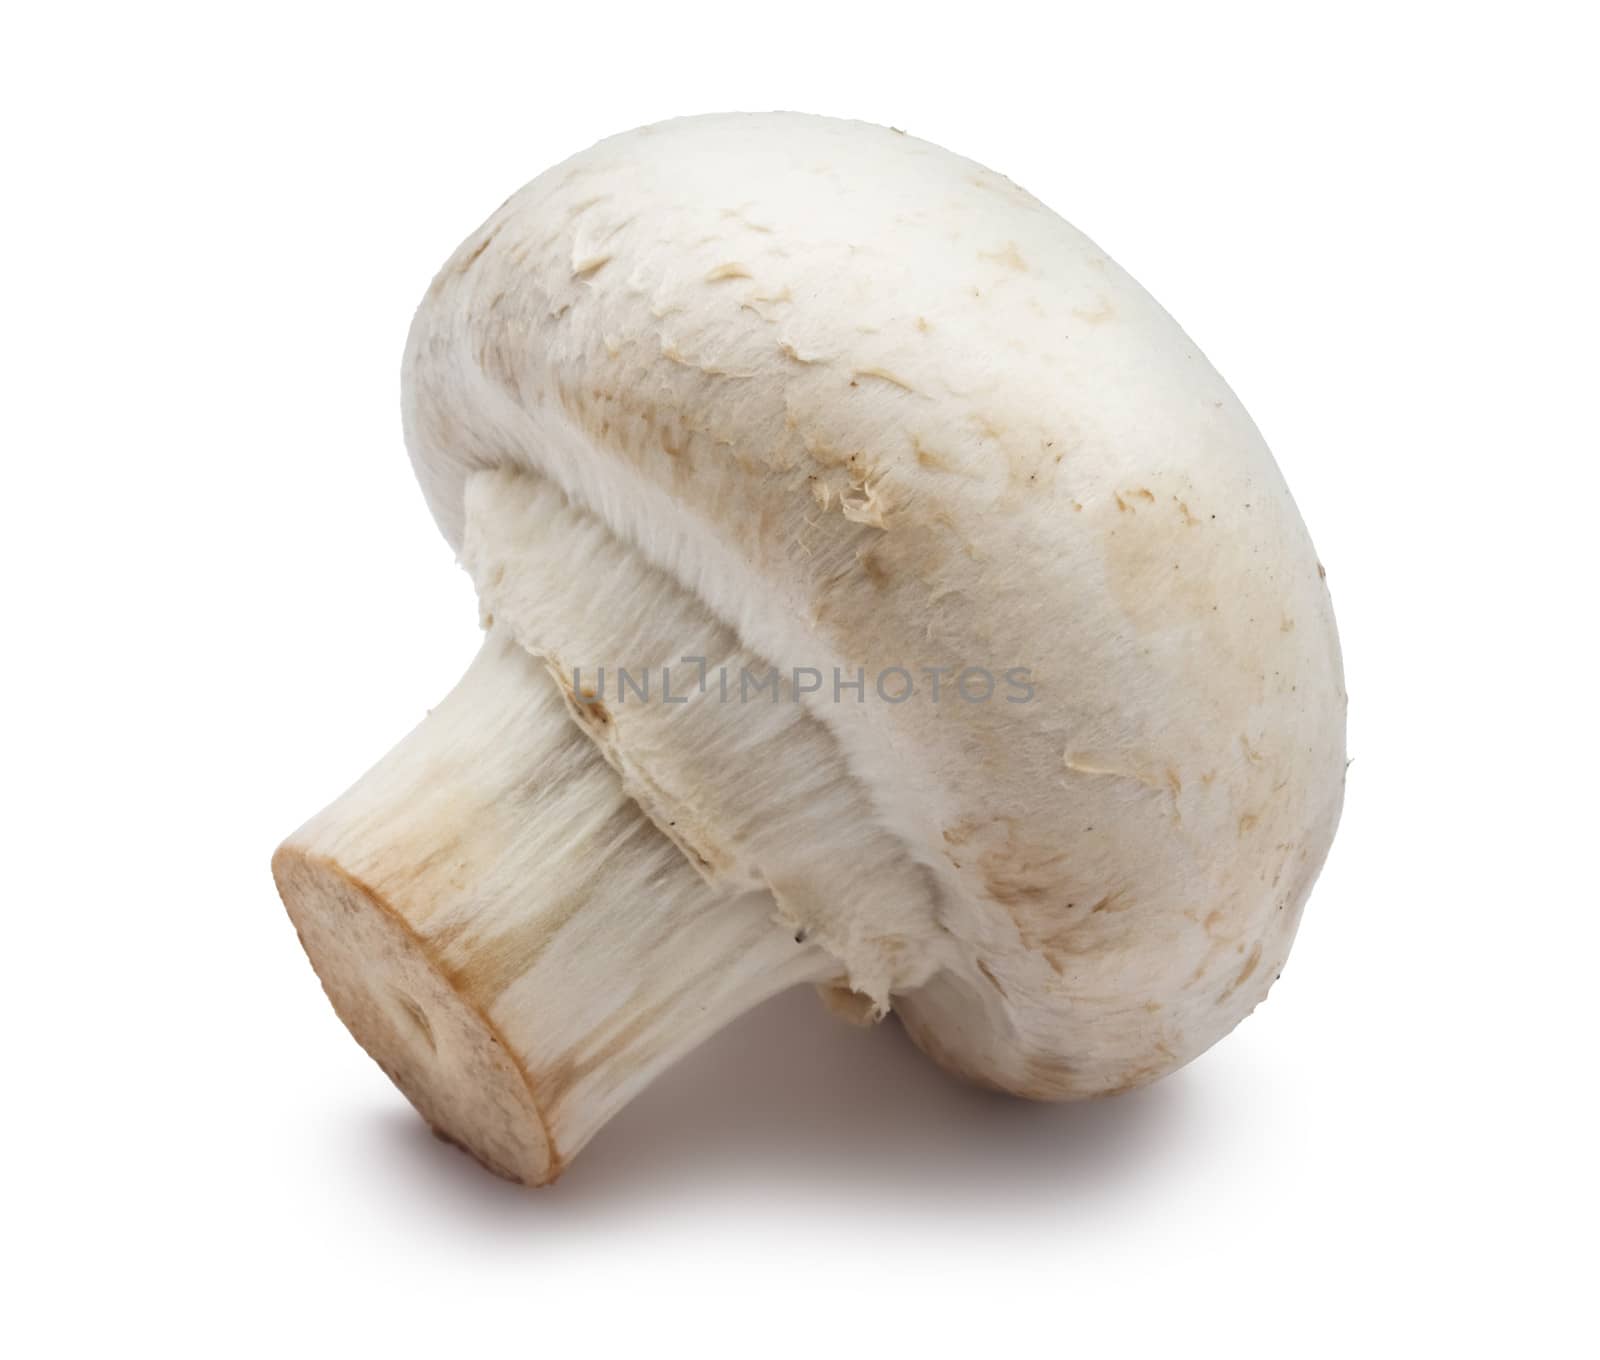 Champignon mushroom by sailorr